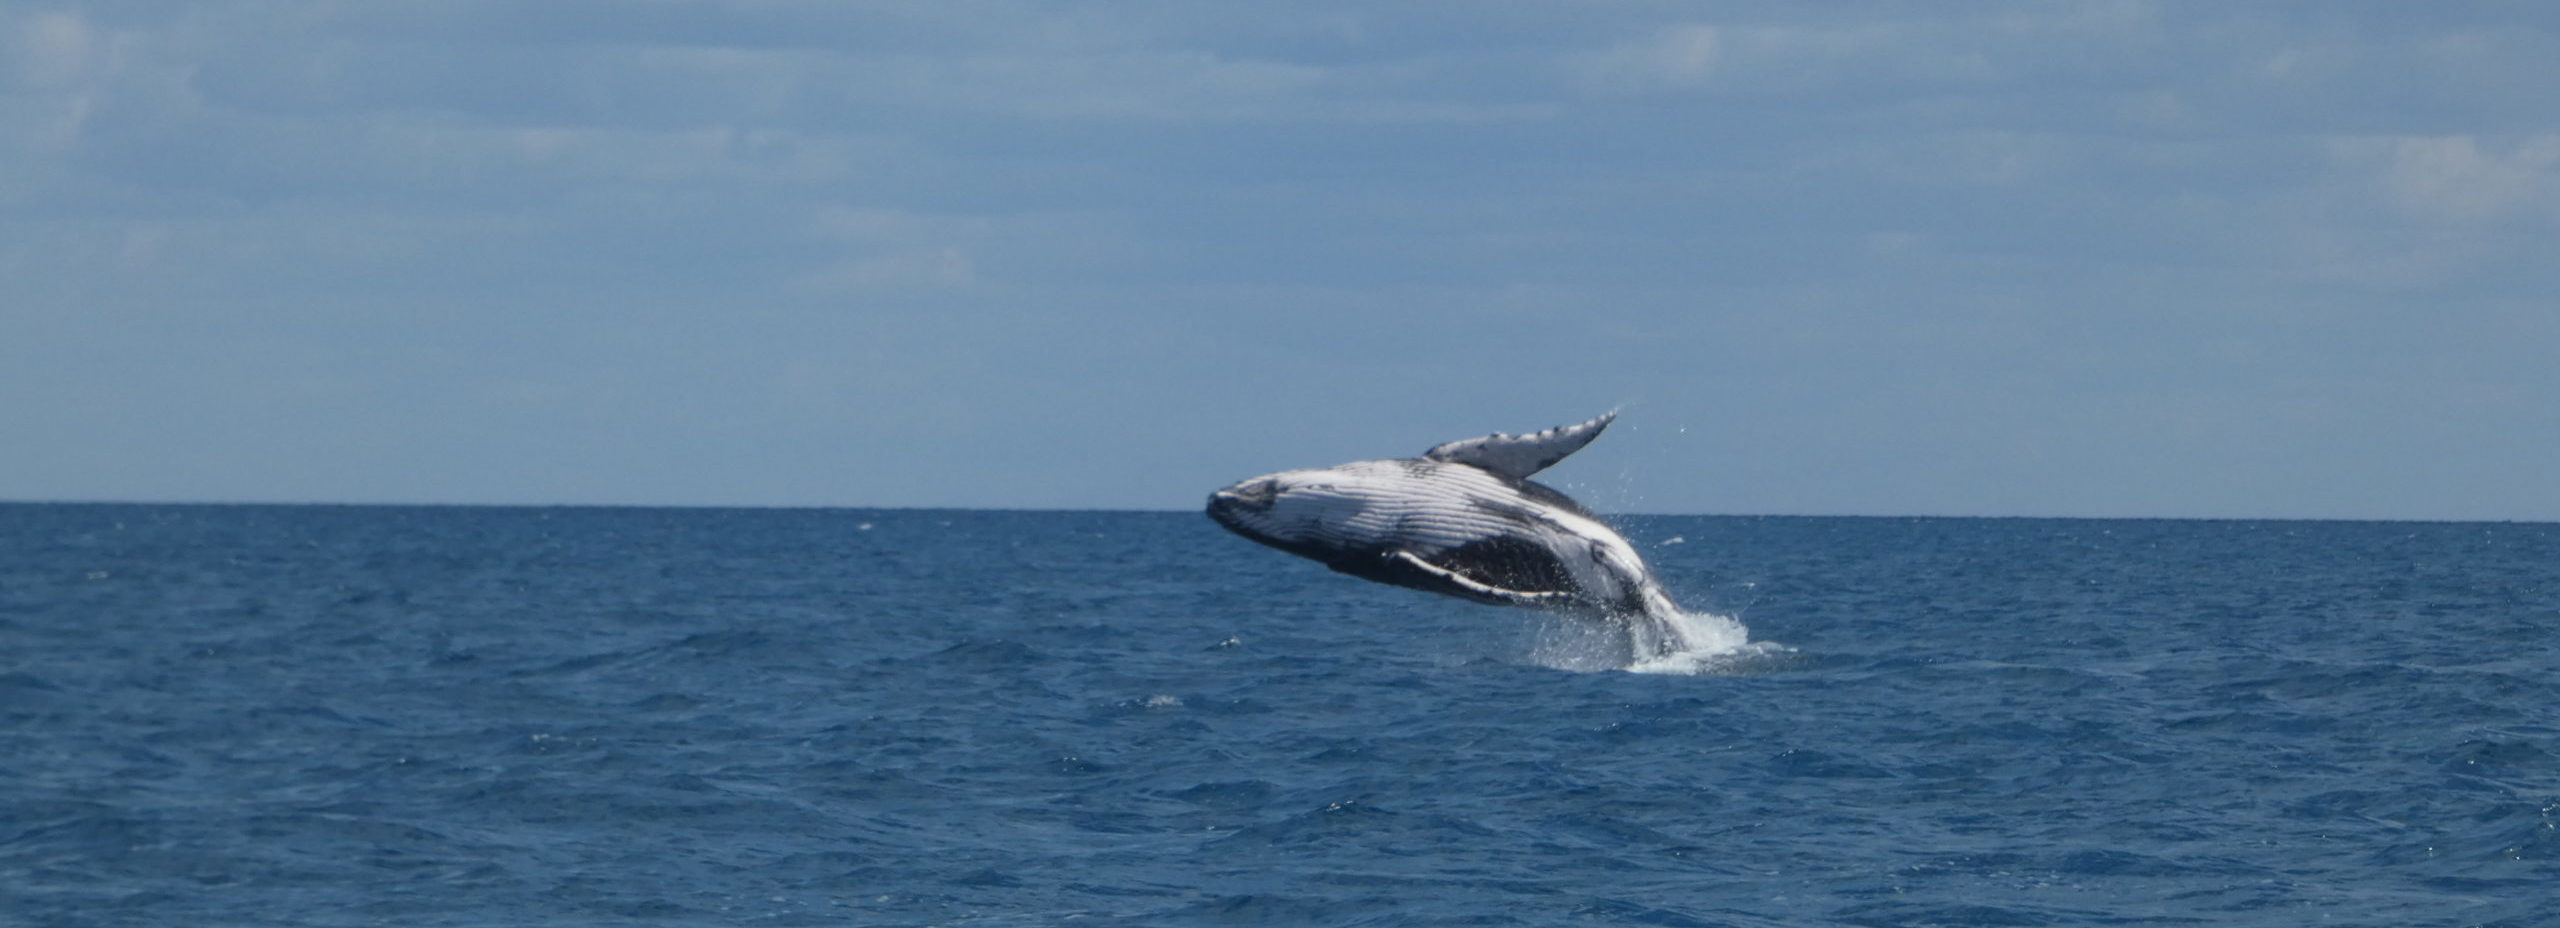 Volunteer Pacific Whale Foundation Eco Adventures Australia